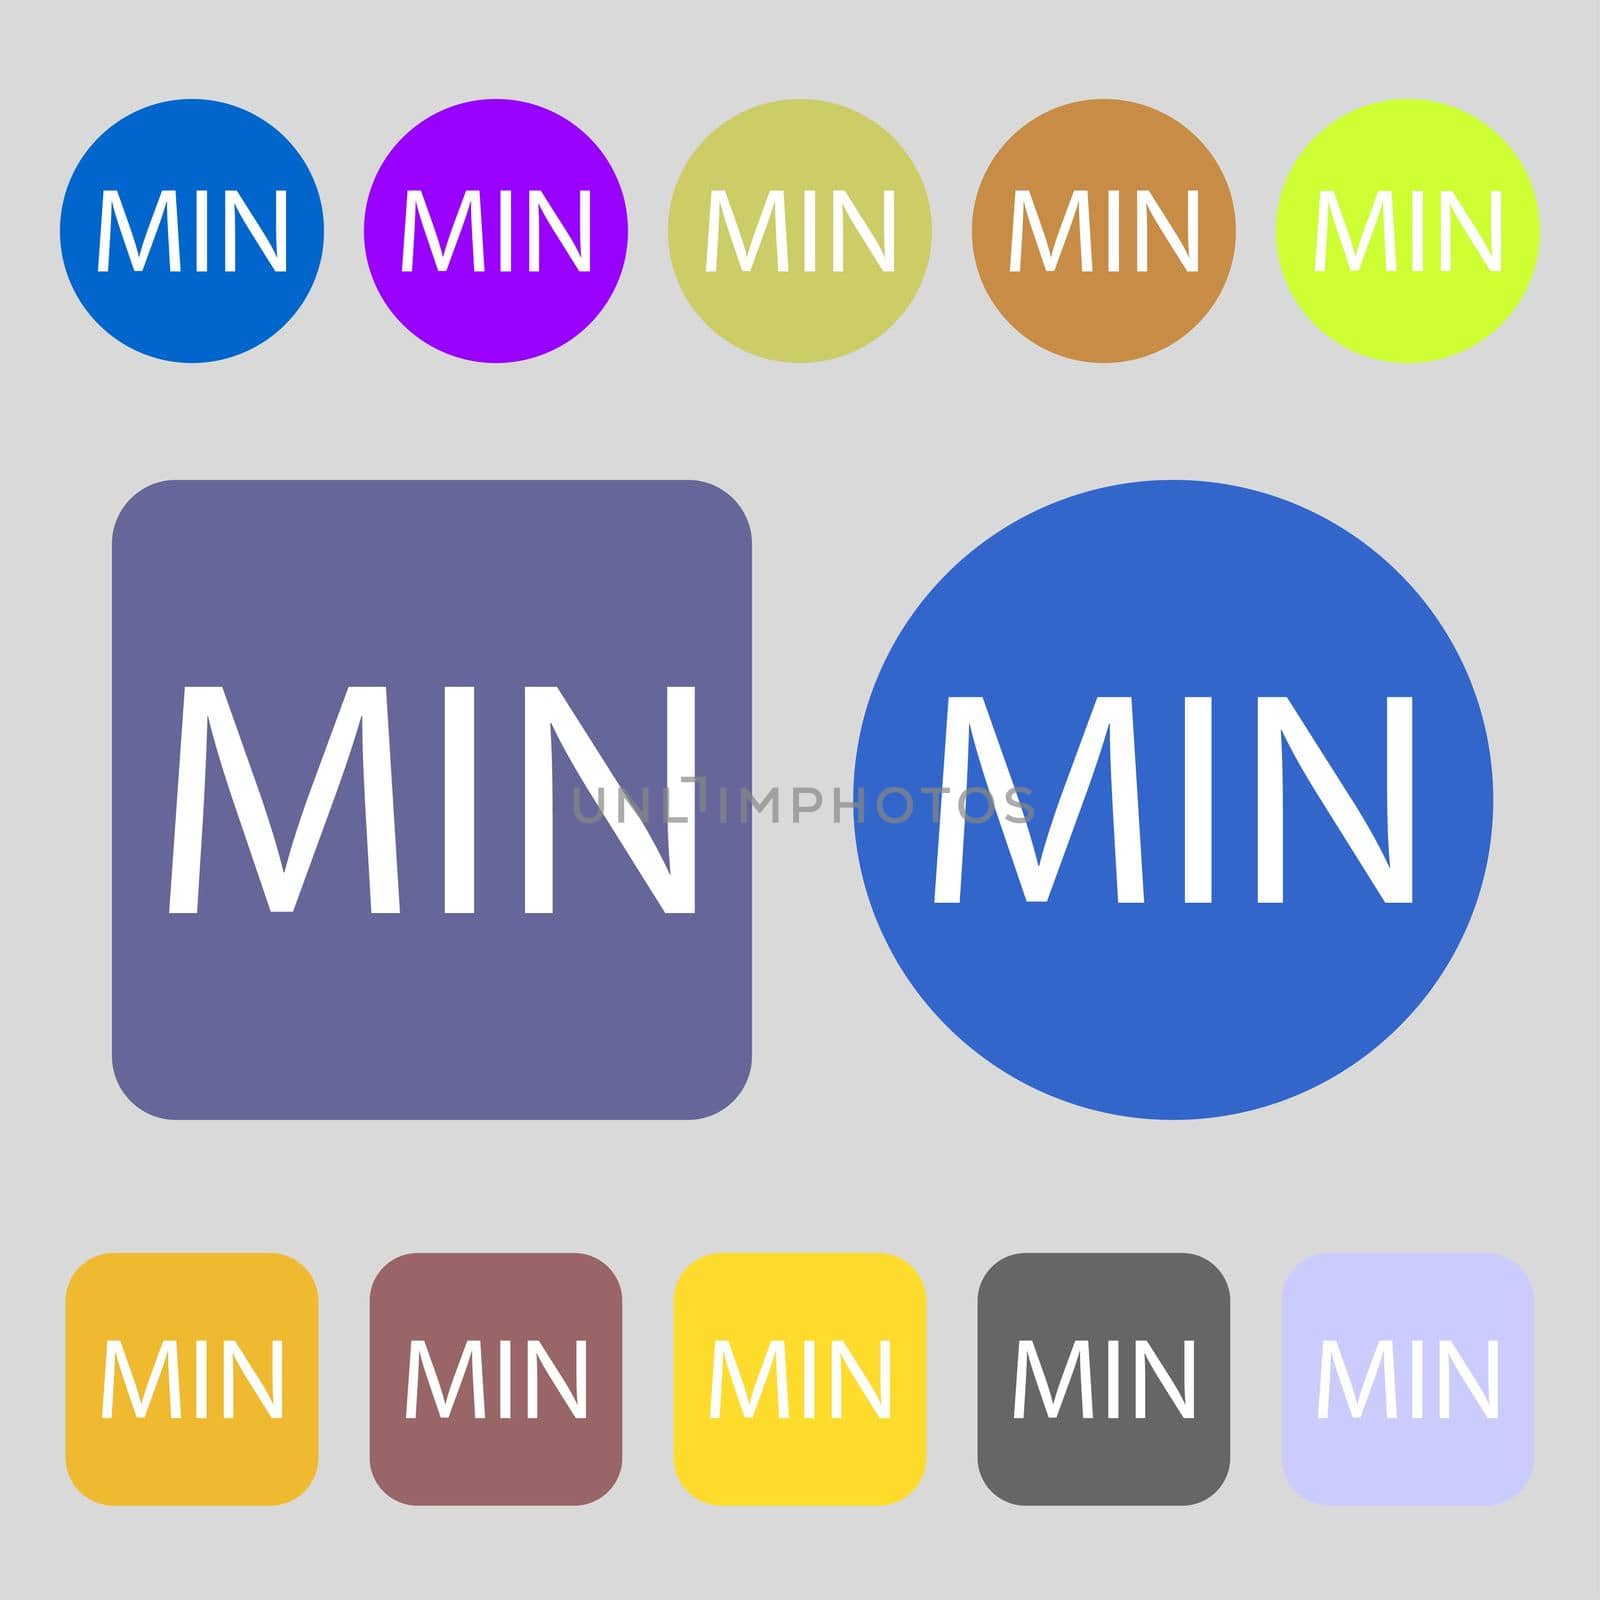 minimum sign icon.12 colored buttons. Flat design. illustration